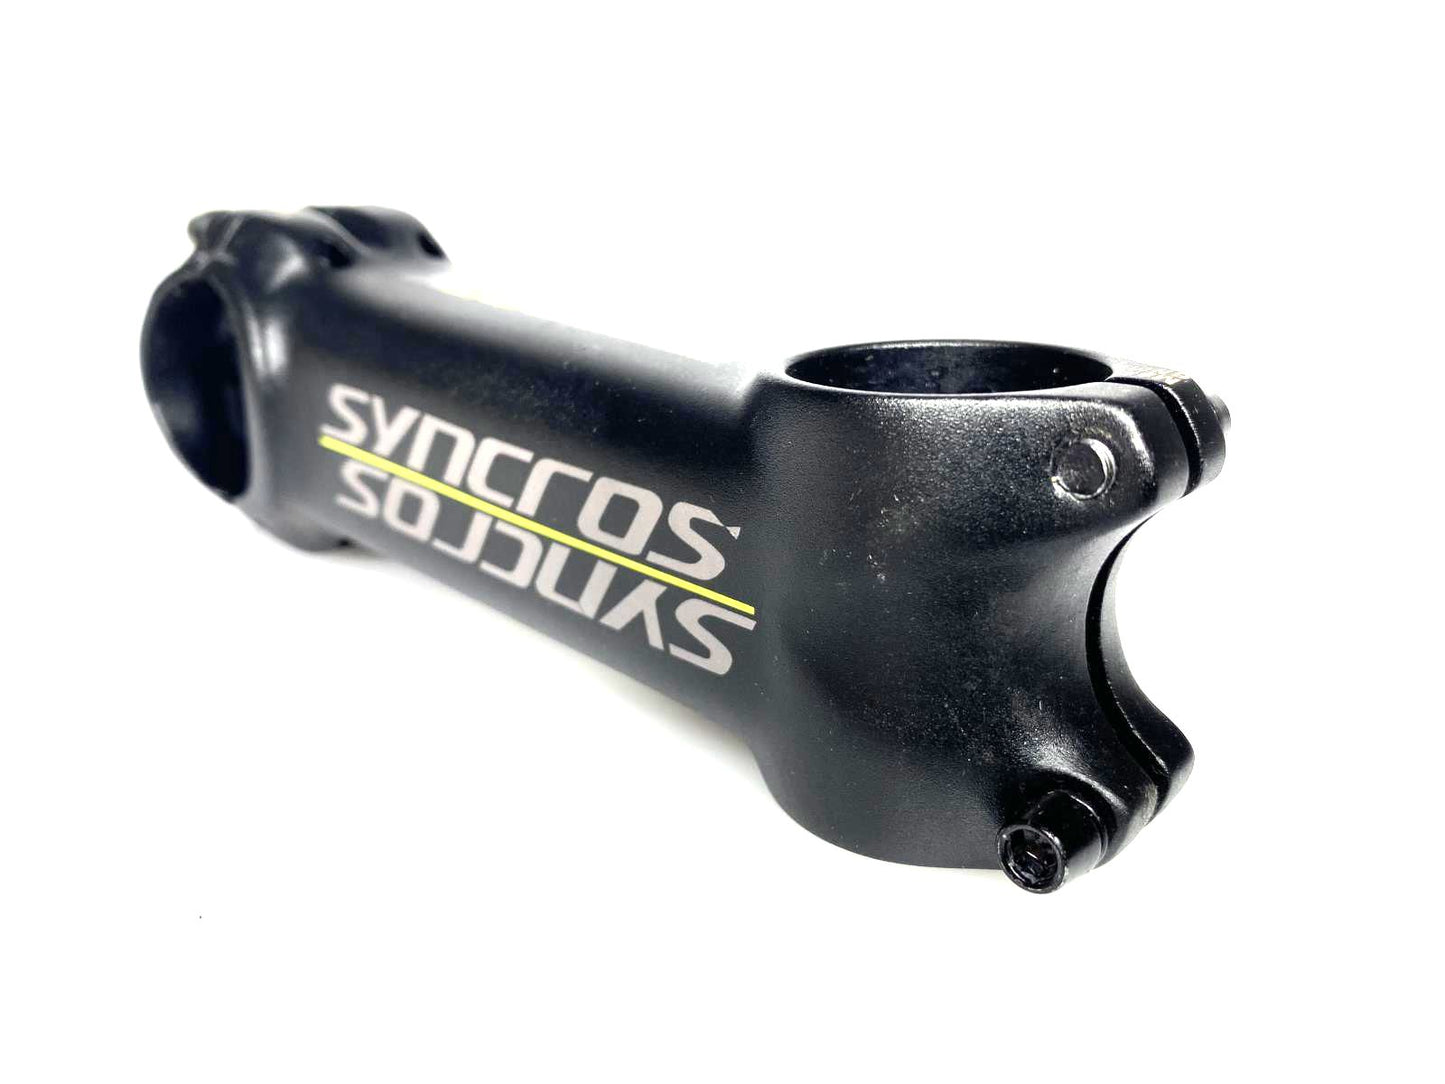 Syncros FL 2.0 Bike Stem 31.8mm x 107 mm x 1-1/8" Threadless Black NEW